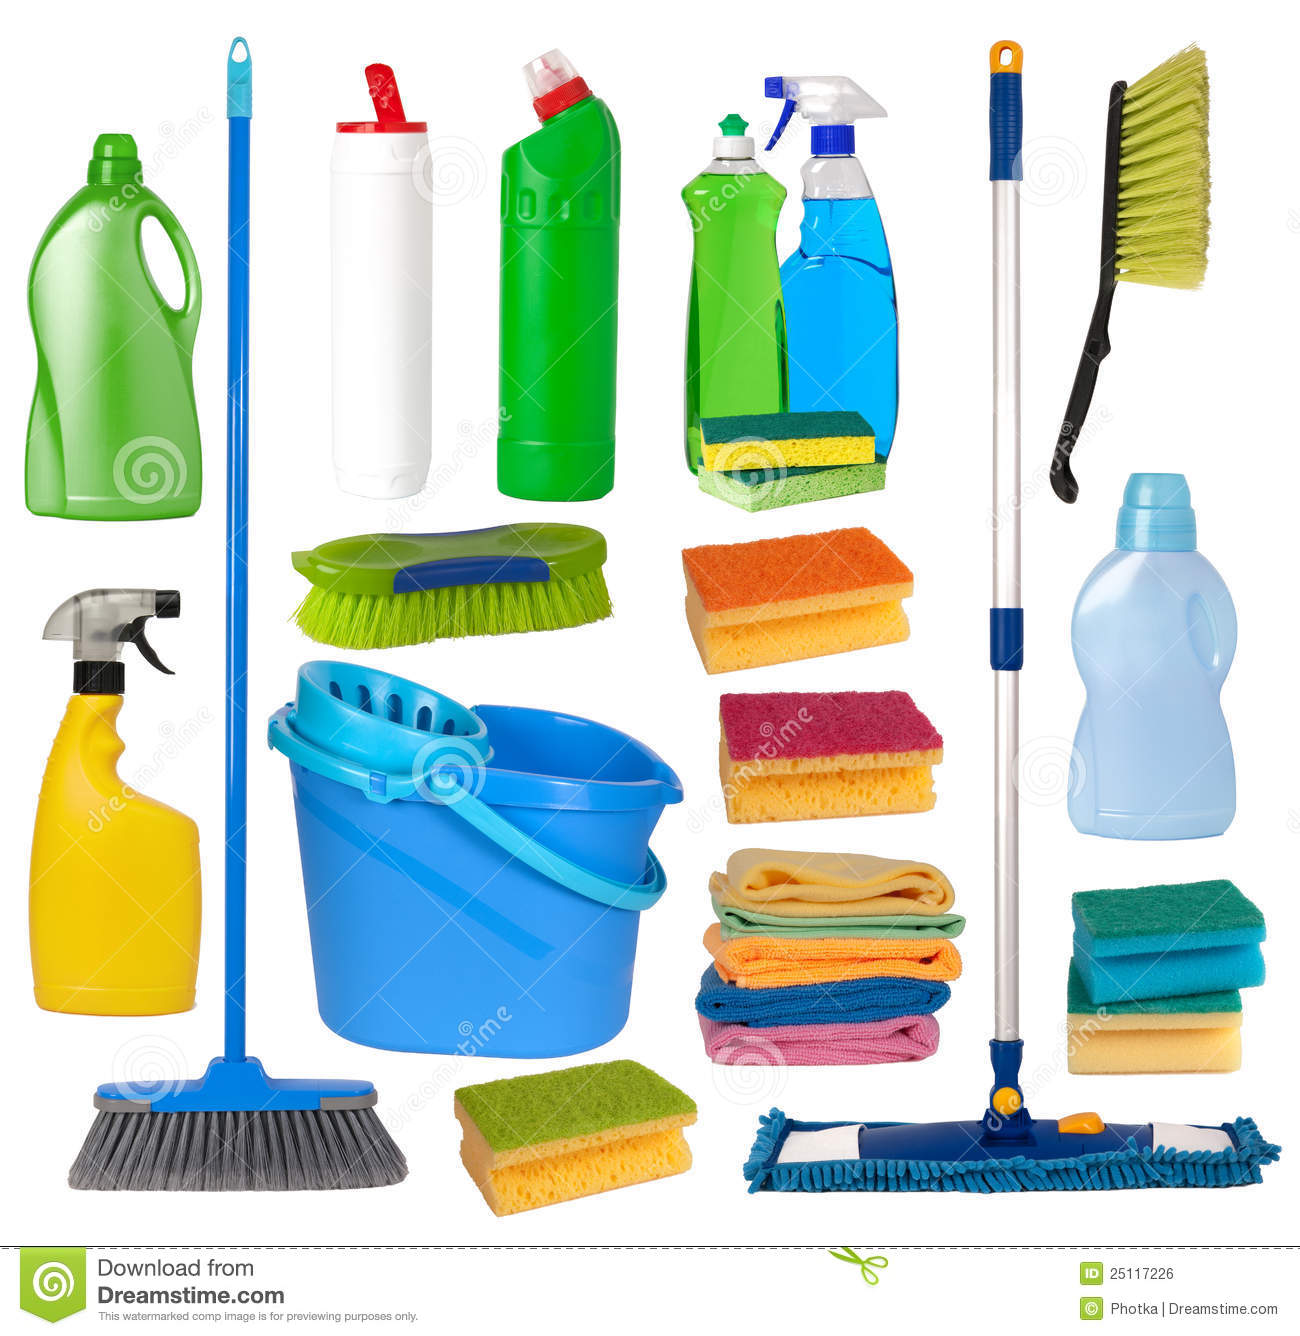 Housework Equipment Royalty Free Stock Image   Image  25117226